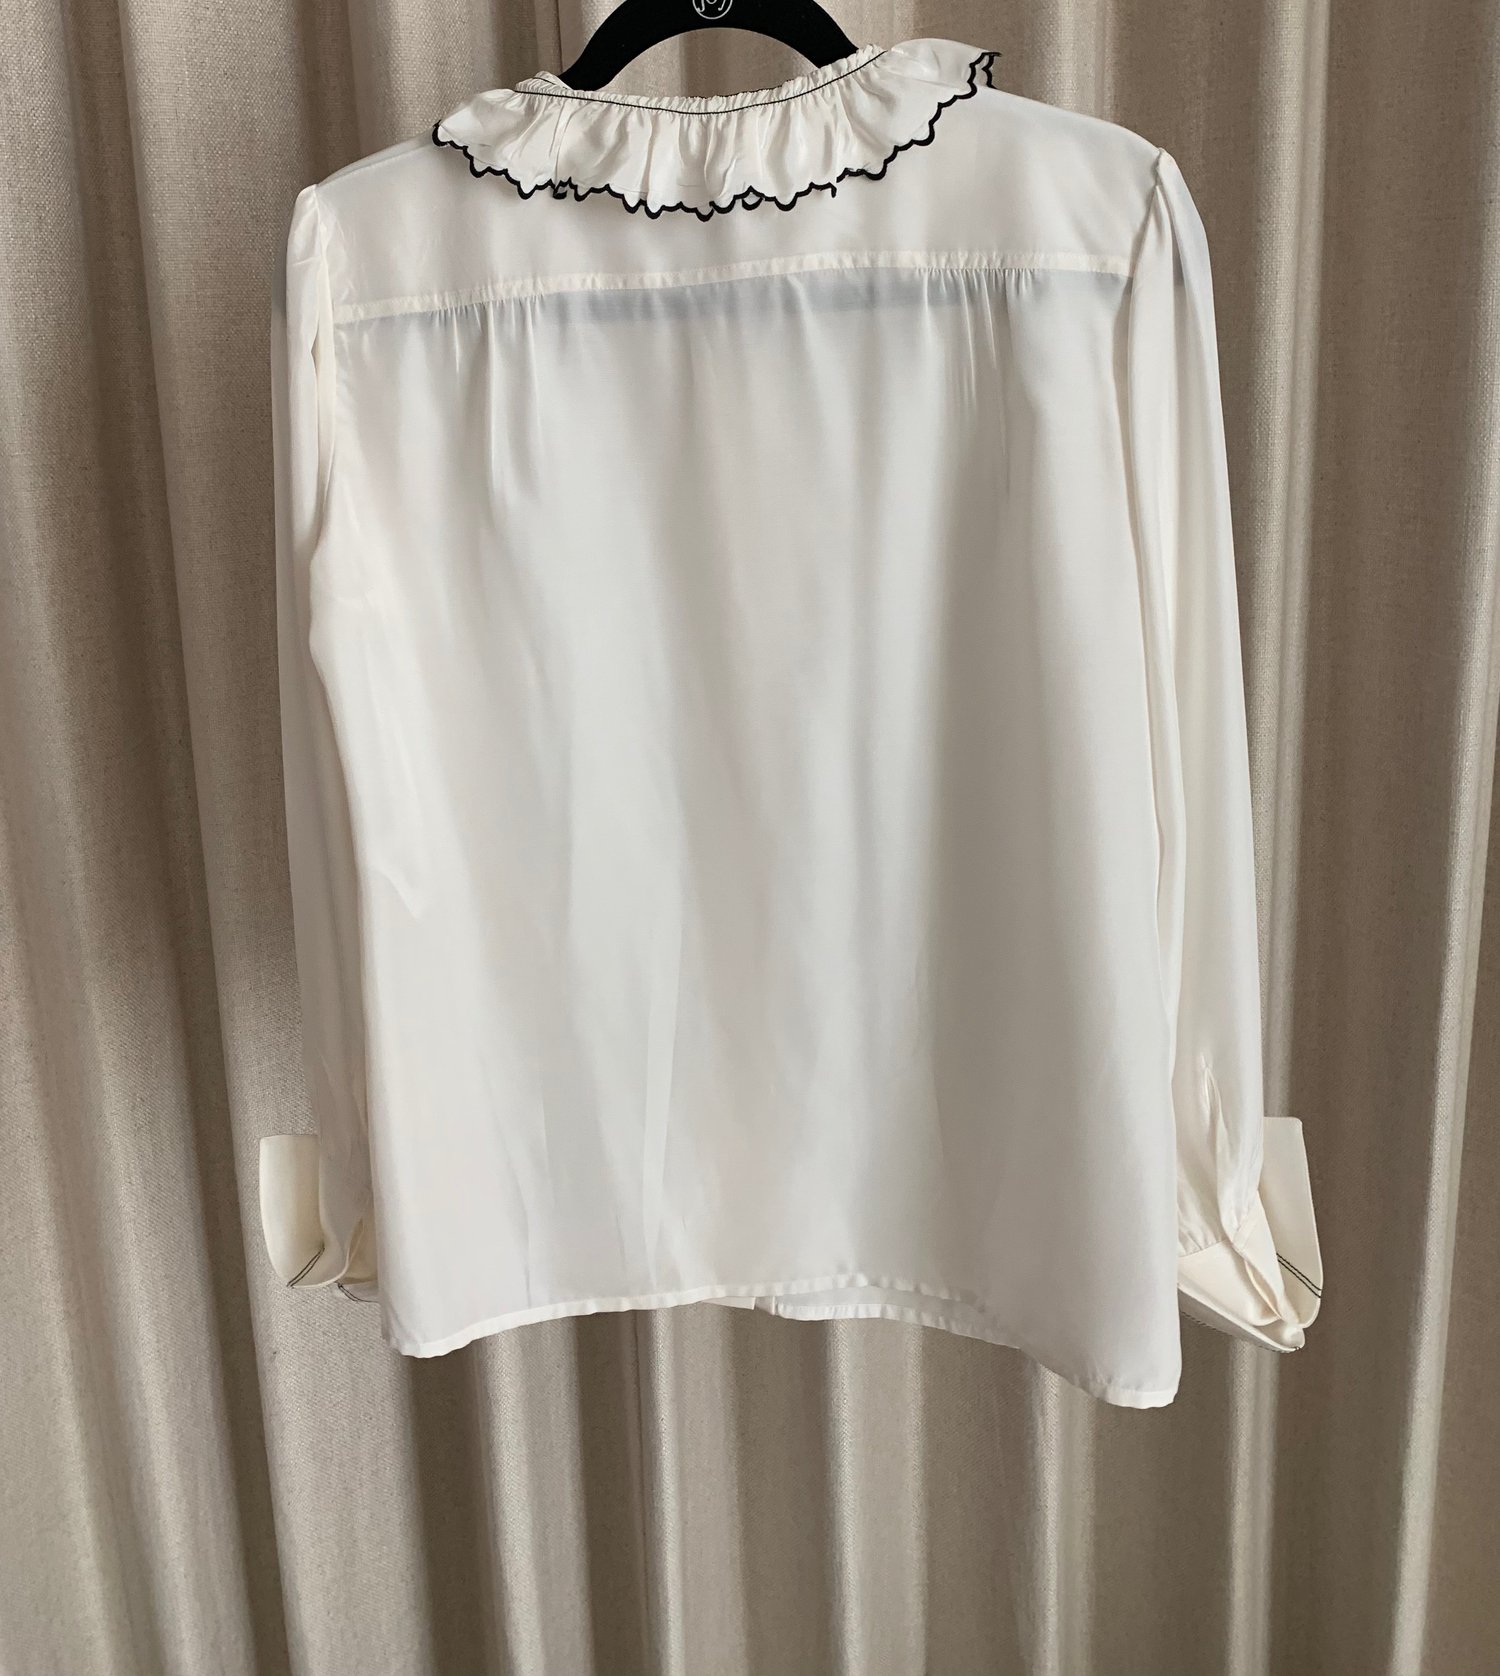 LV blouse – Royals closet